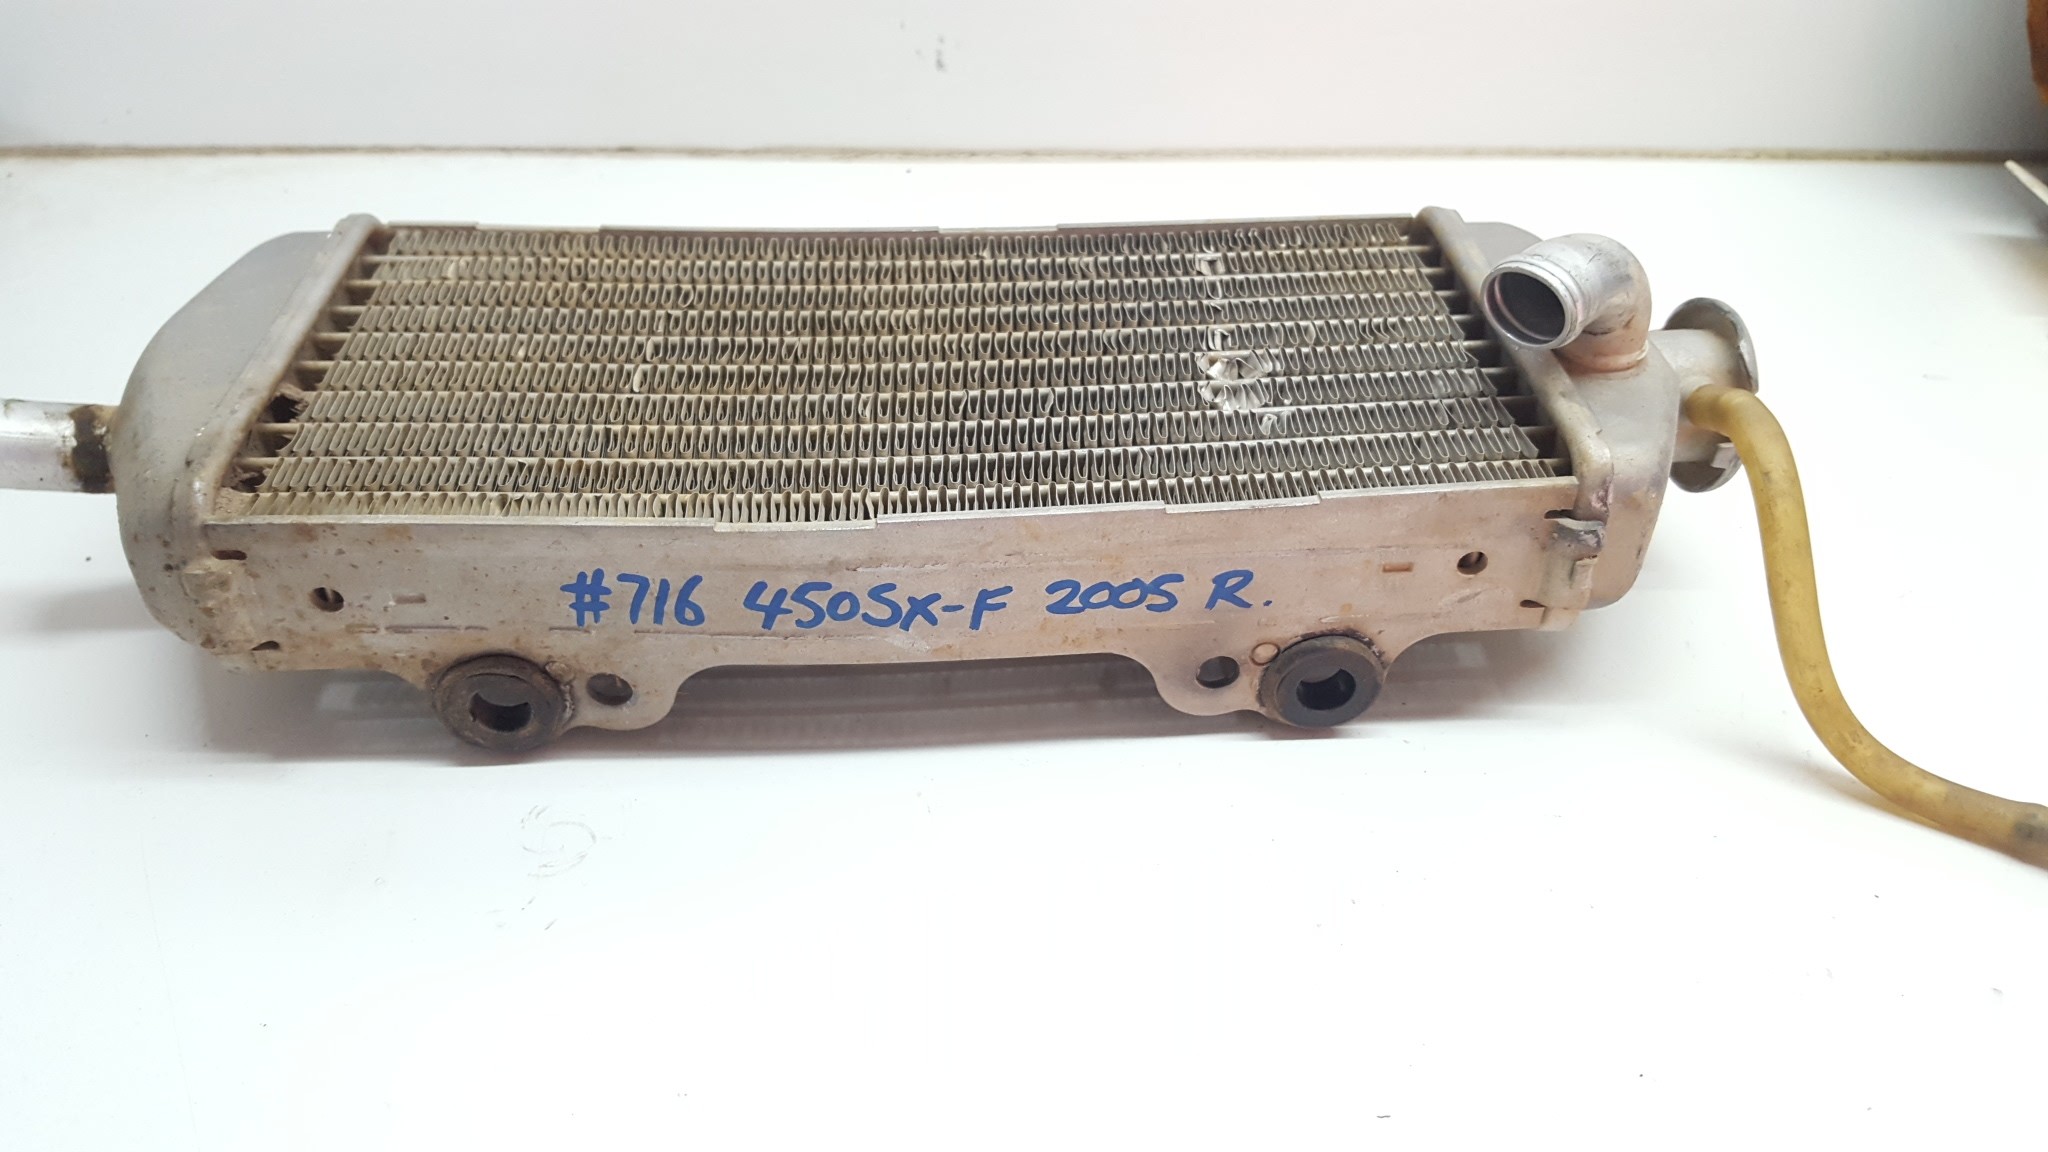 Left Radiator KTM 450SX-F 2005 525 540 #716